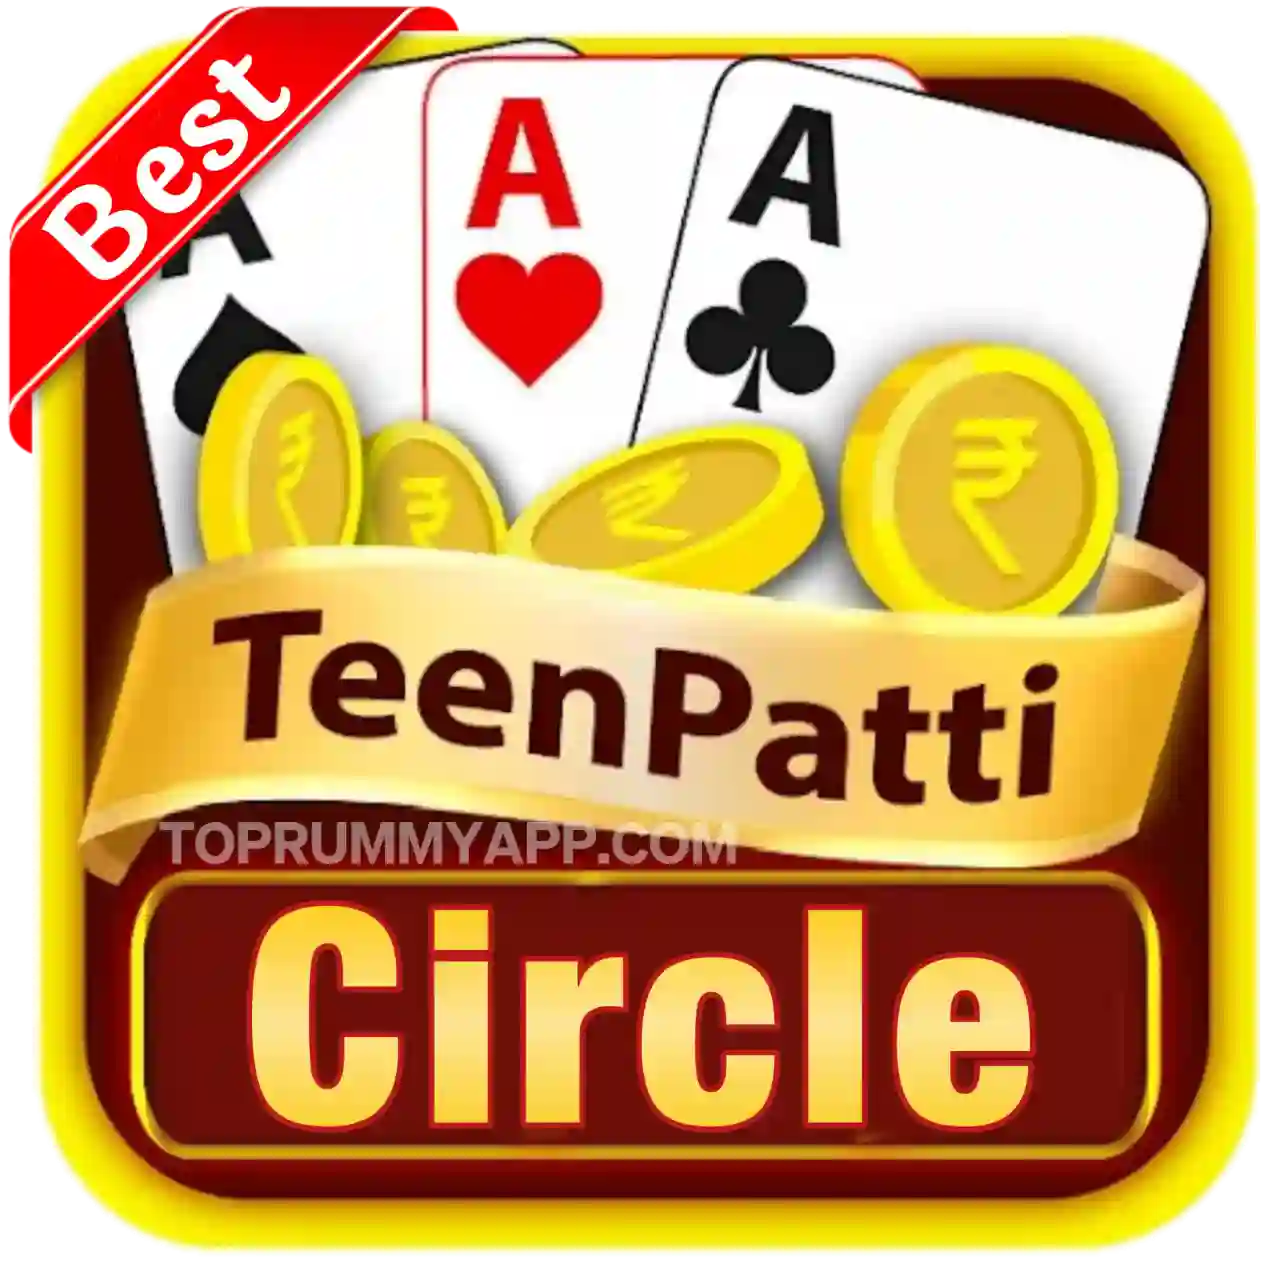 Teen Patti Circle Apk Download - Teen Patti Yes Apk Download